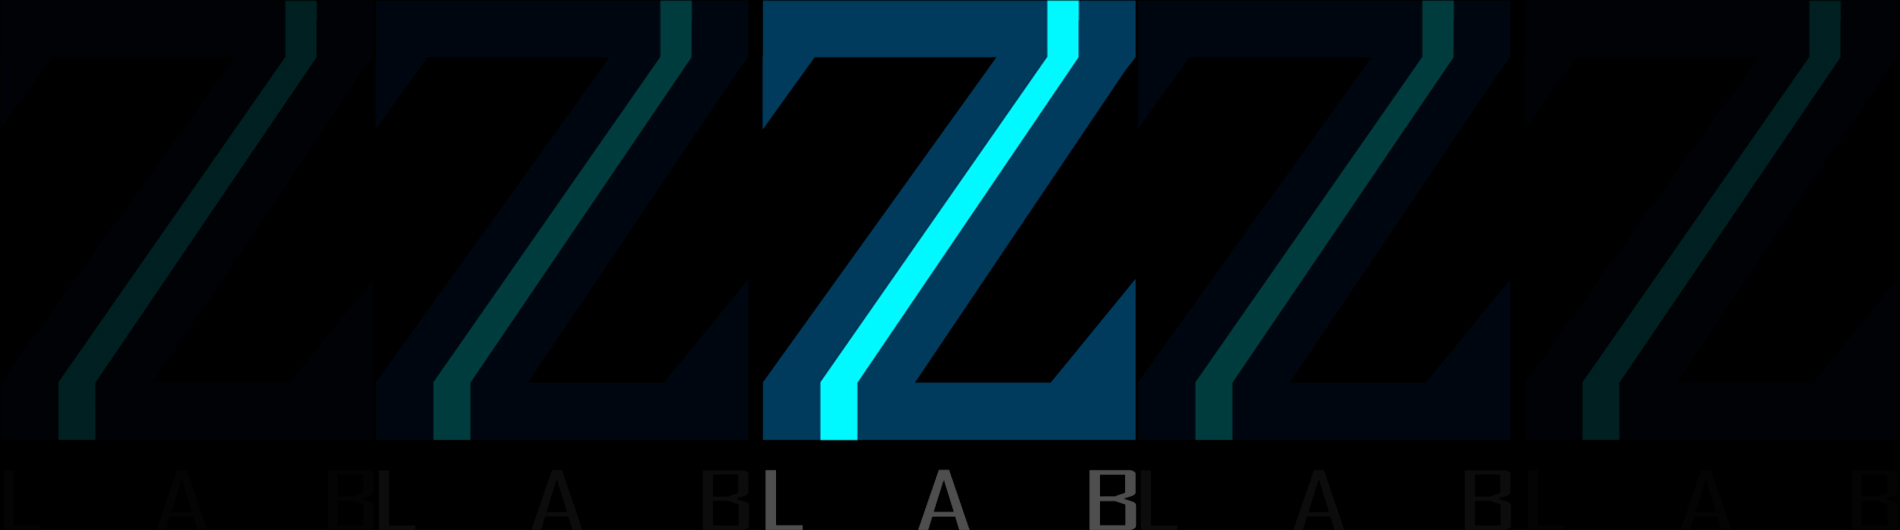 ZVR Lab logo large Z